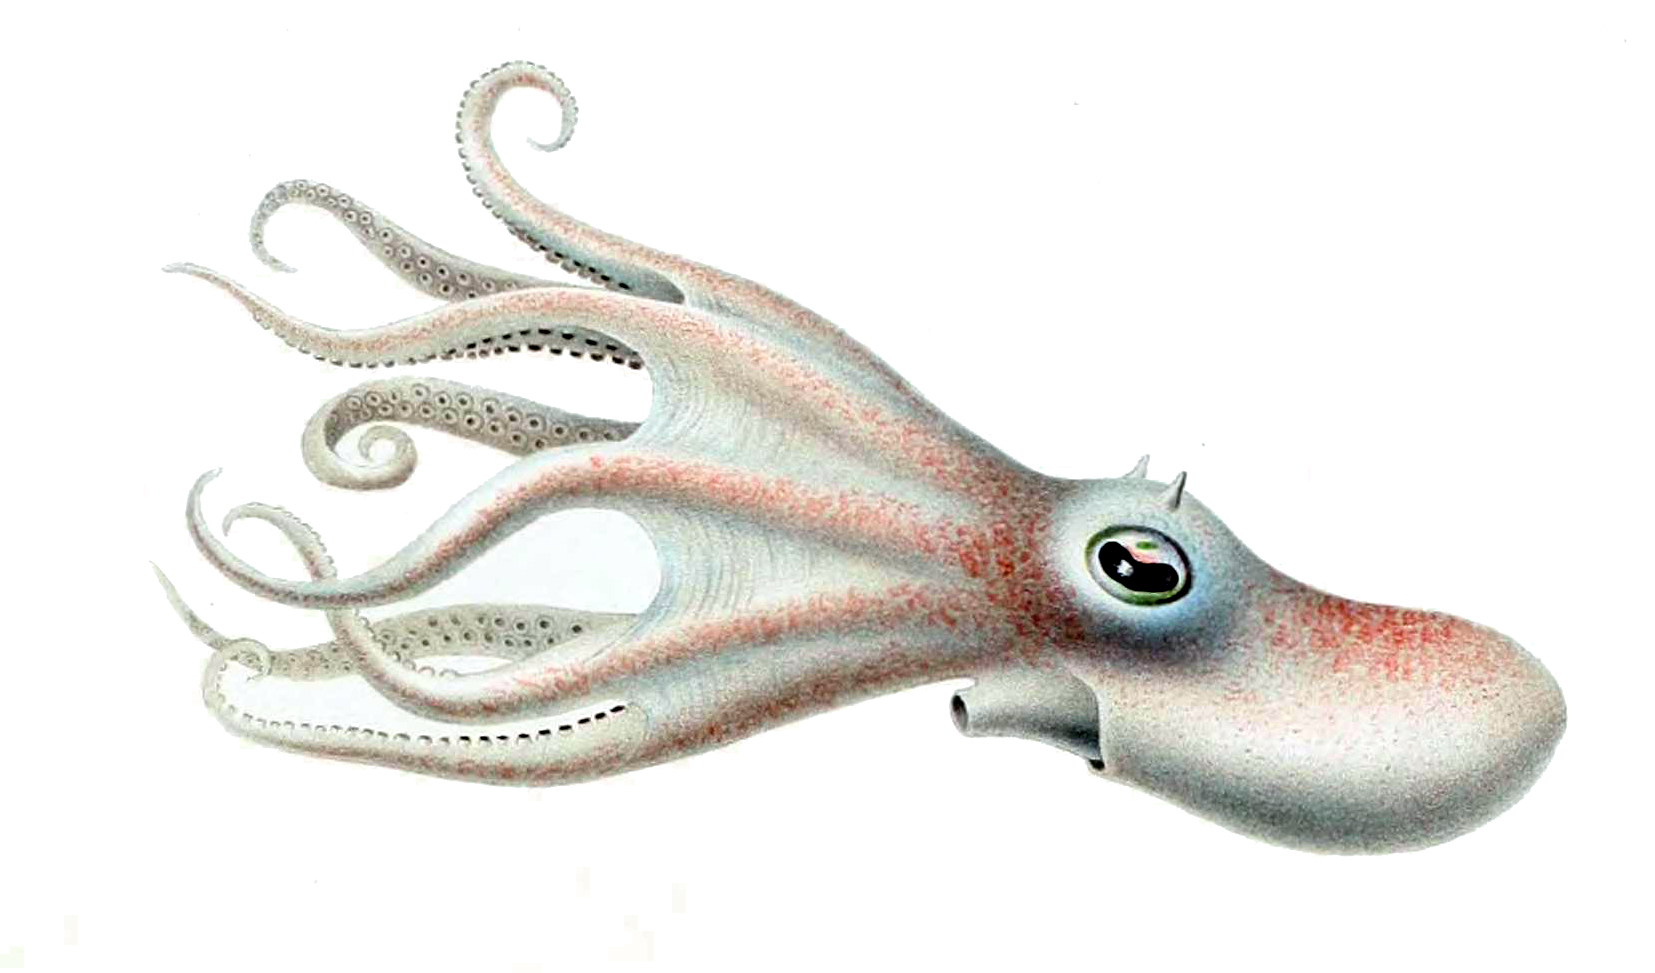 Drawing of Bathypolypus valdiviae, an octopus